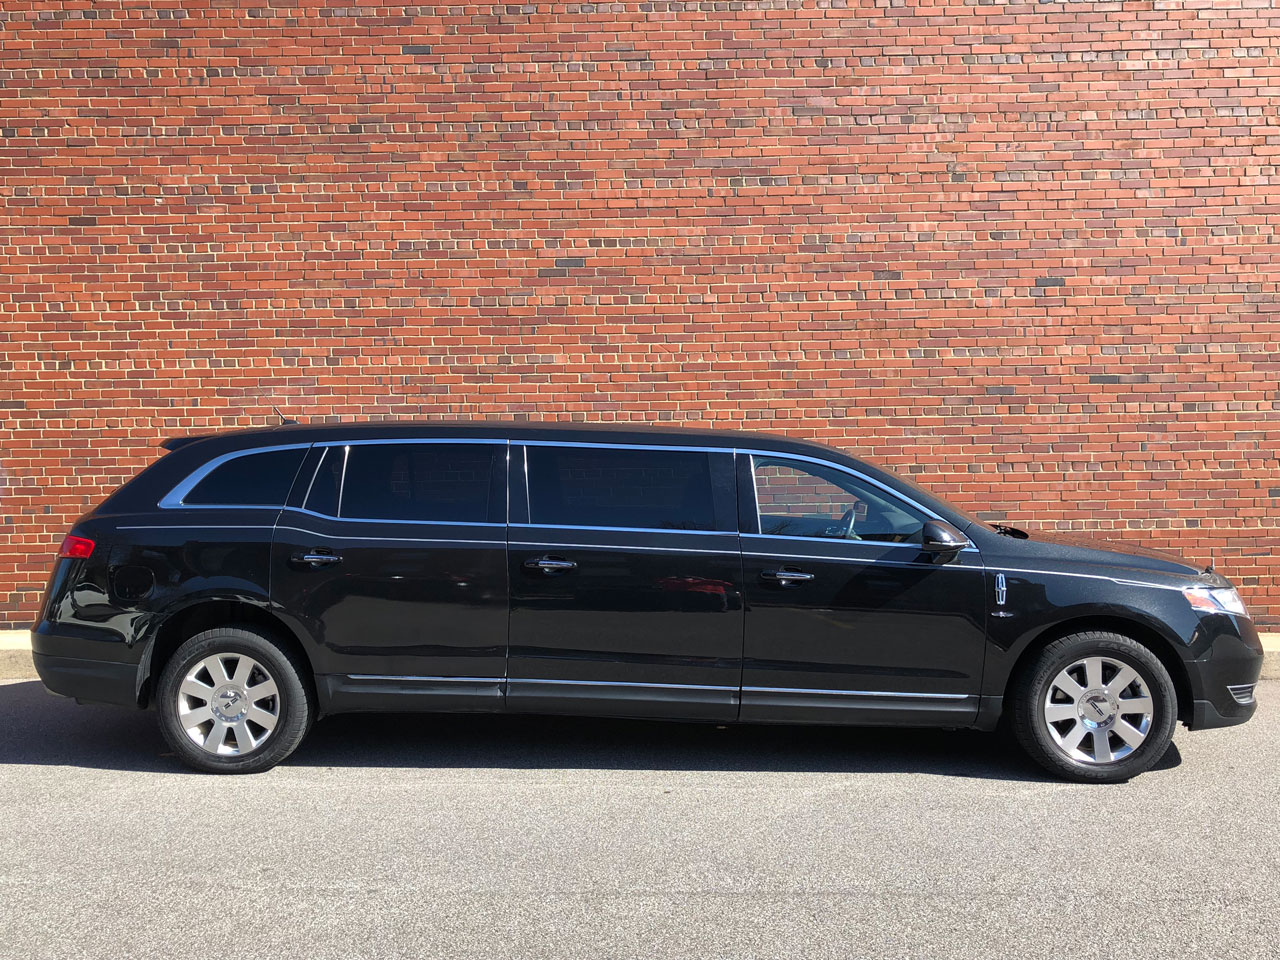 2019 Eagle Coach Company Lincoln MKT Regency Limousine 1